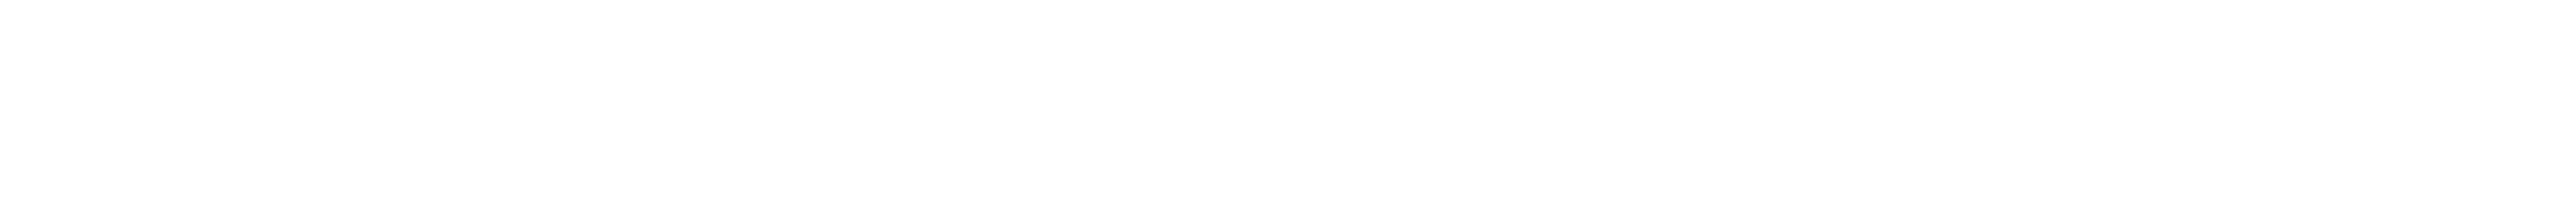 subheader logo